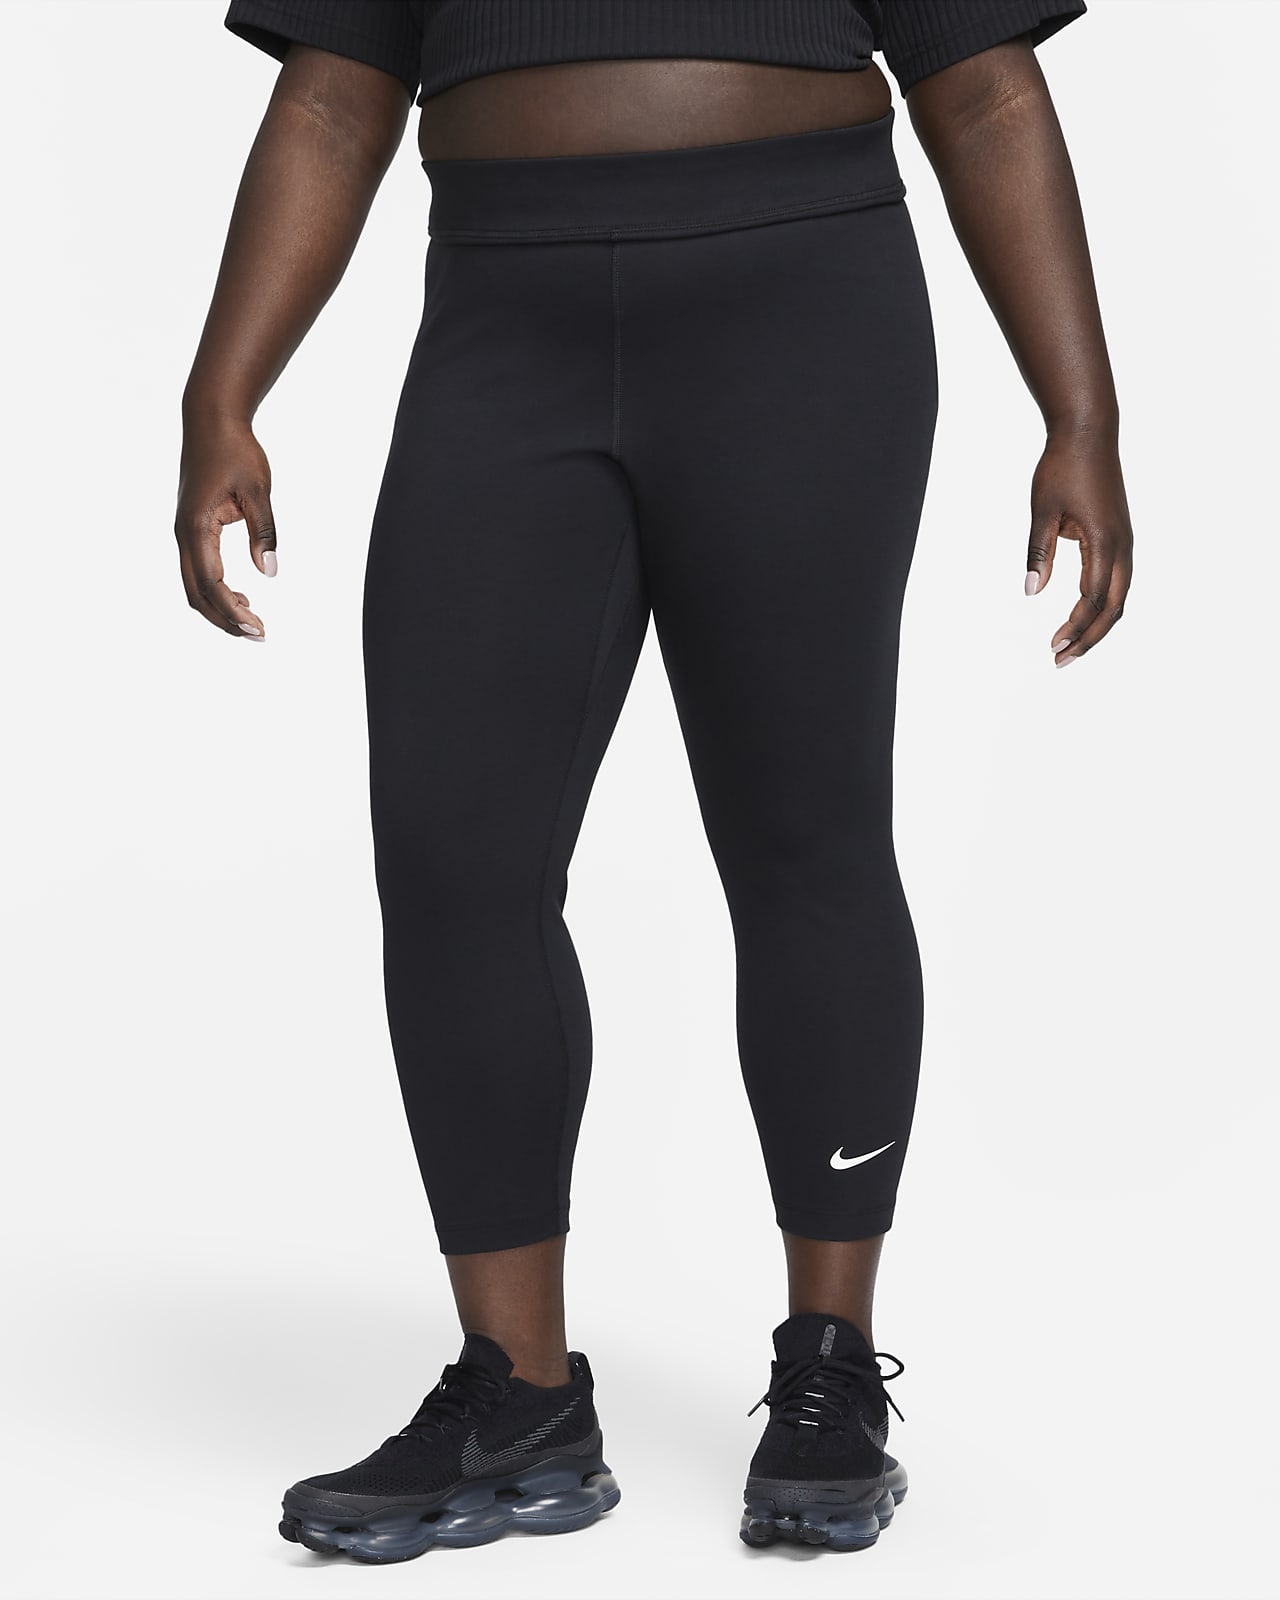 Nike Sportswear Classic Leggings de 7/8 de talle alto (Talla grande) - Mujer